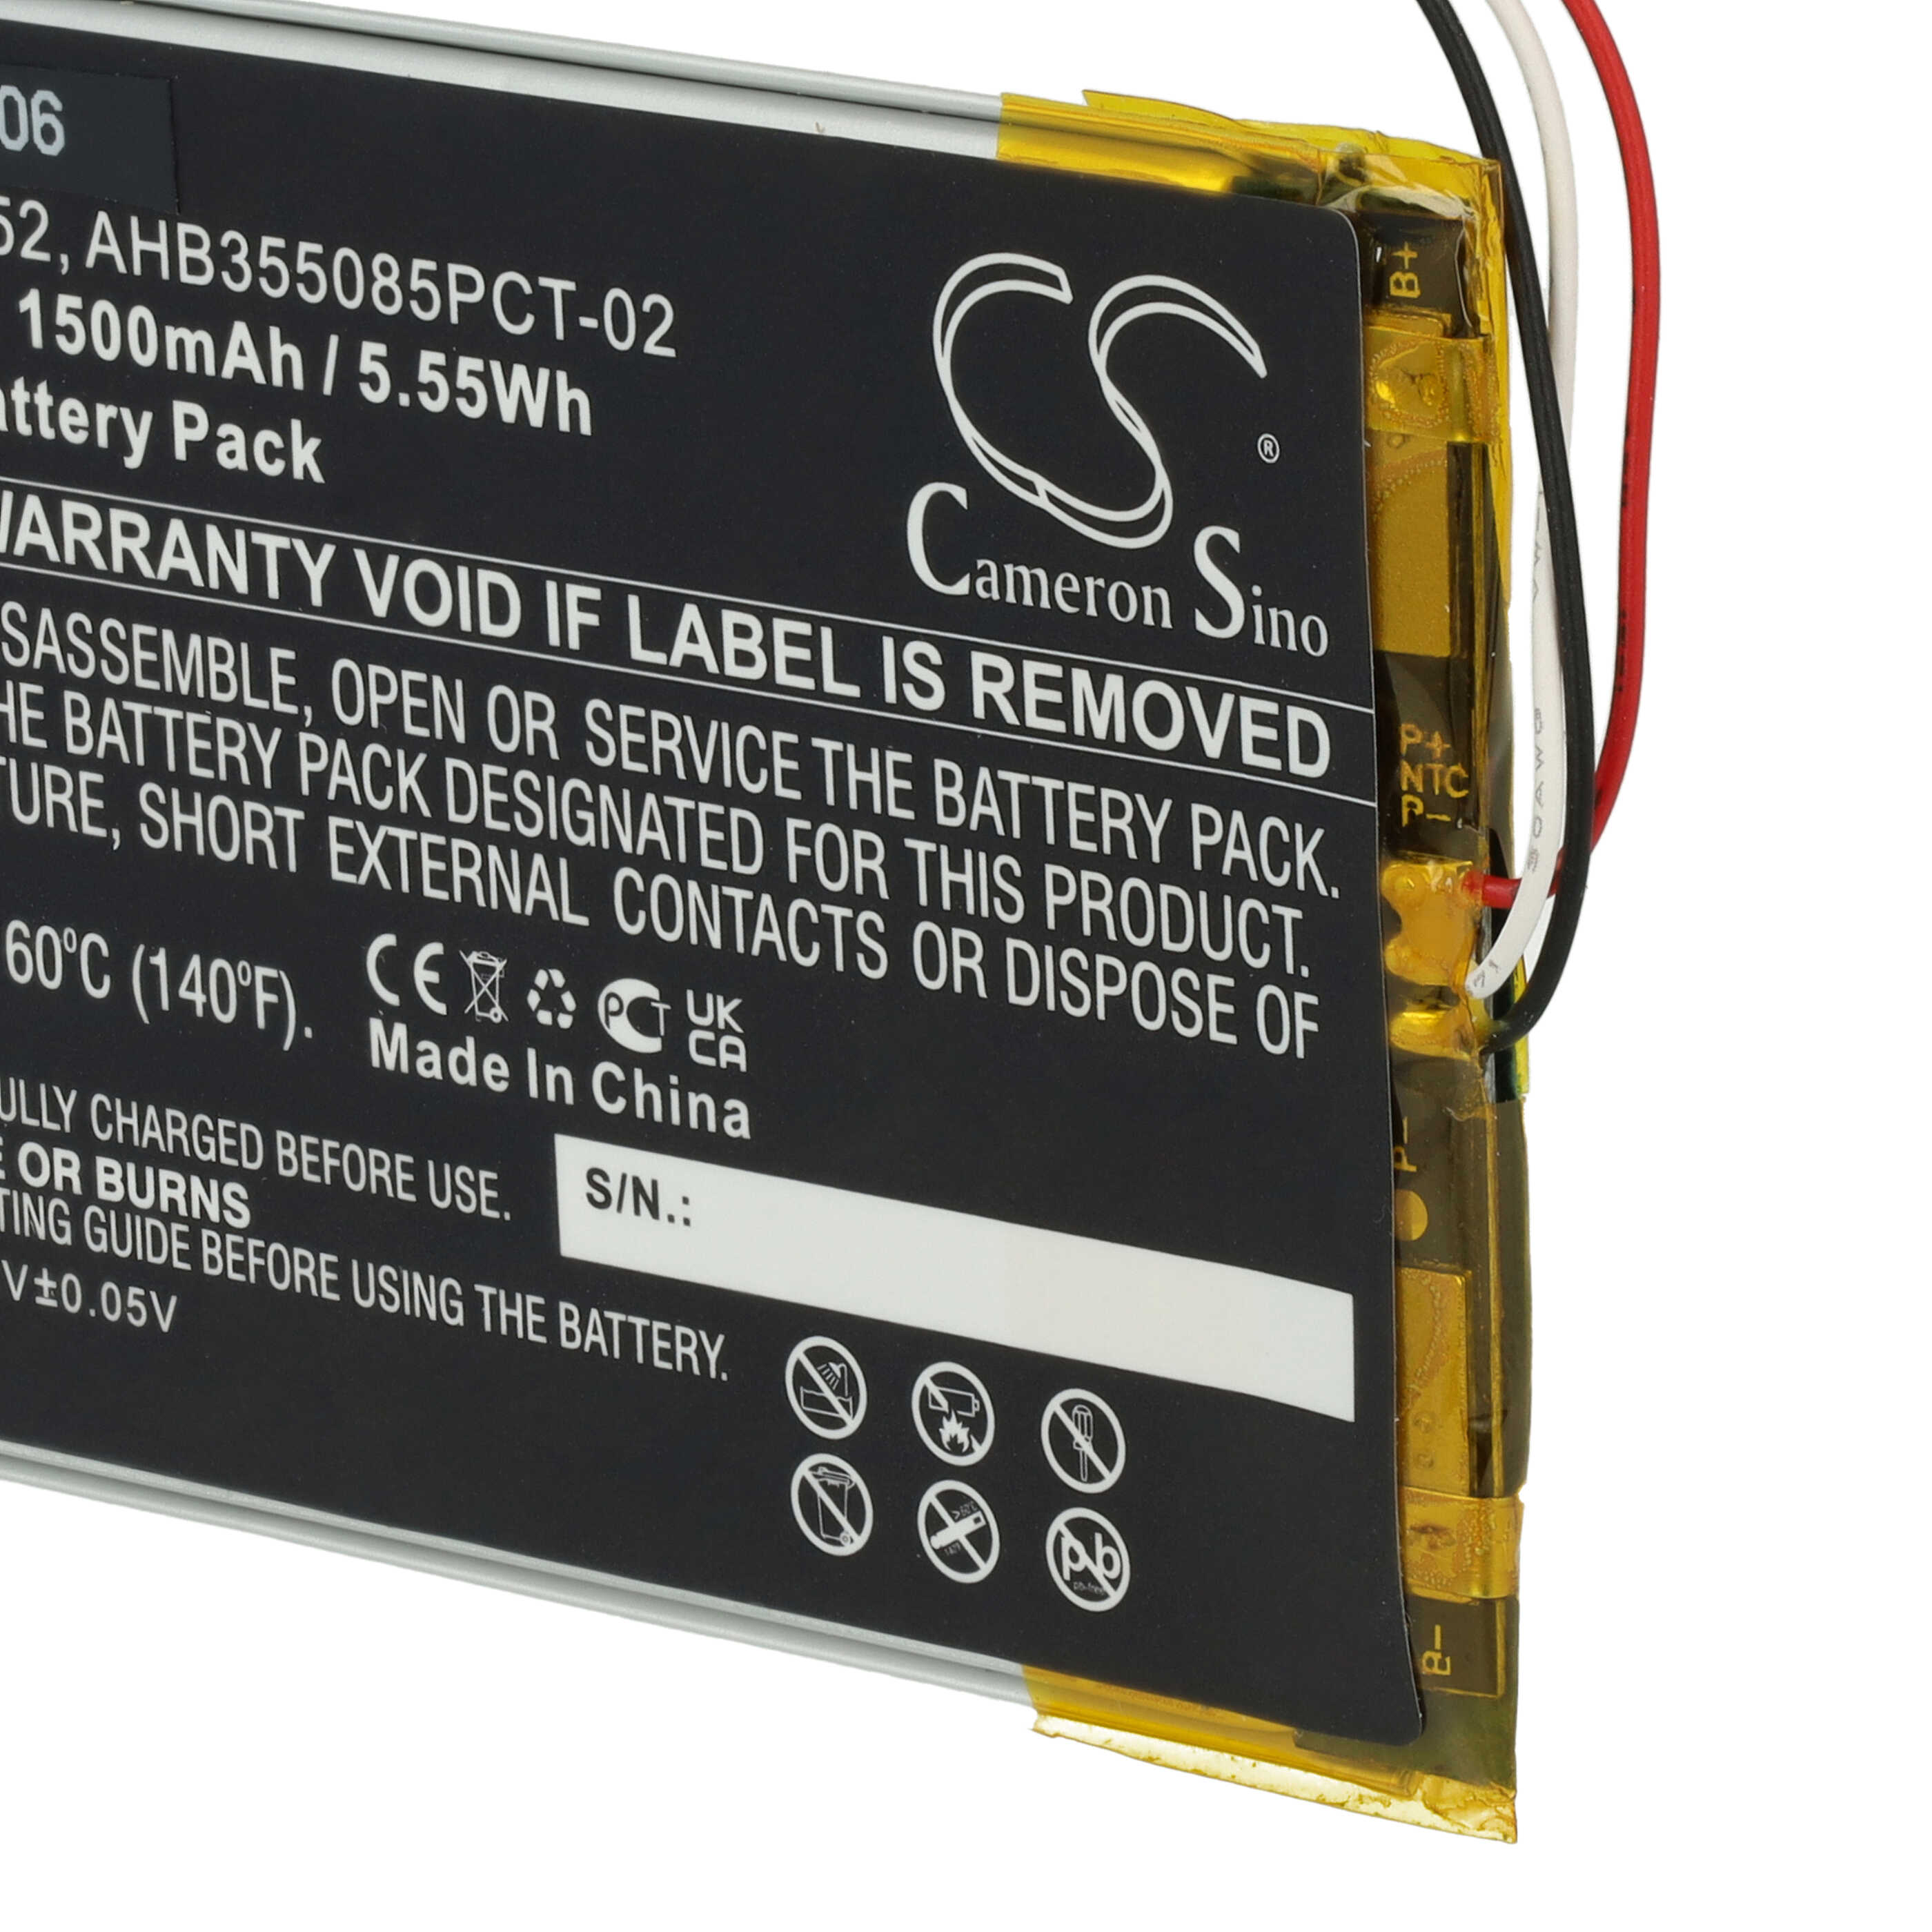 Wireless Keyboard Battery Replacement for Logitech 533-000152, 533-000204 - 1500mAh 3.7V Li-polymer